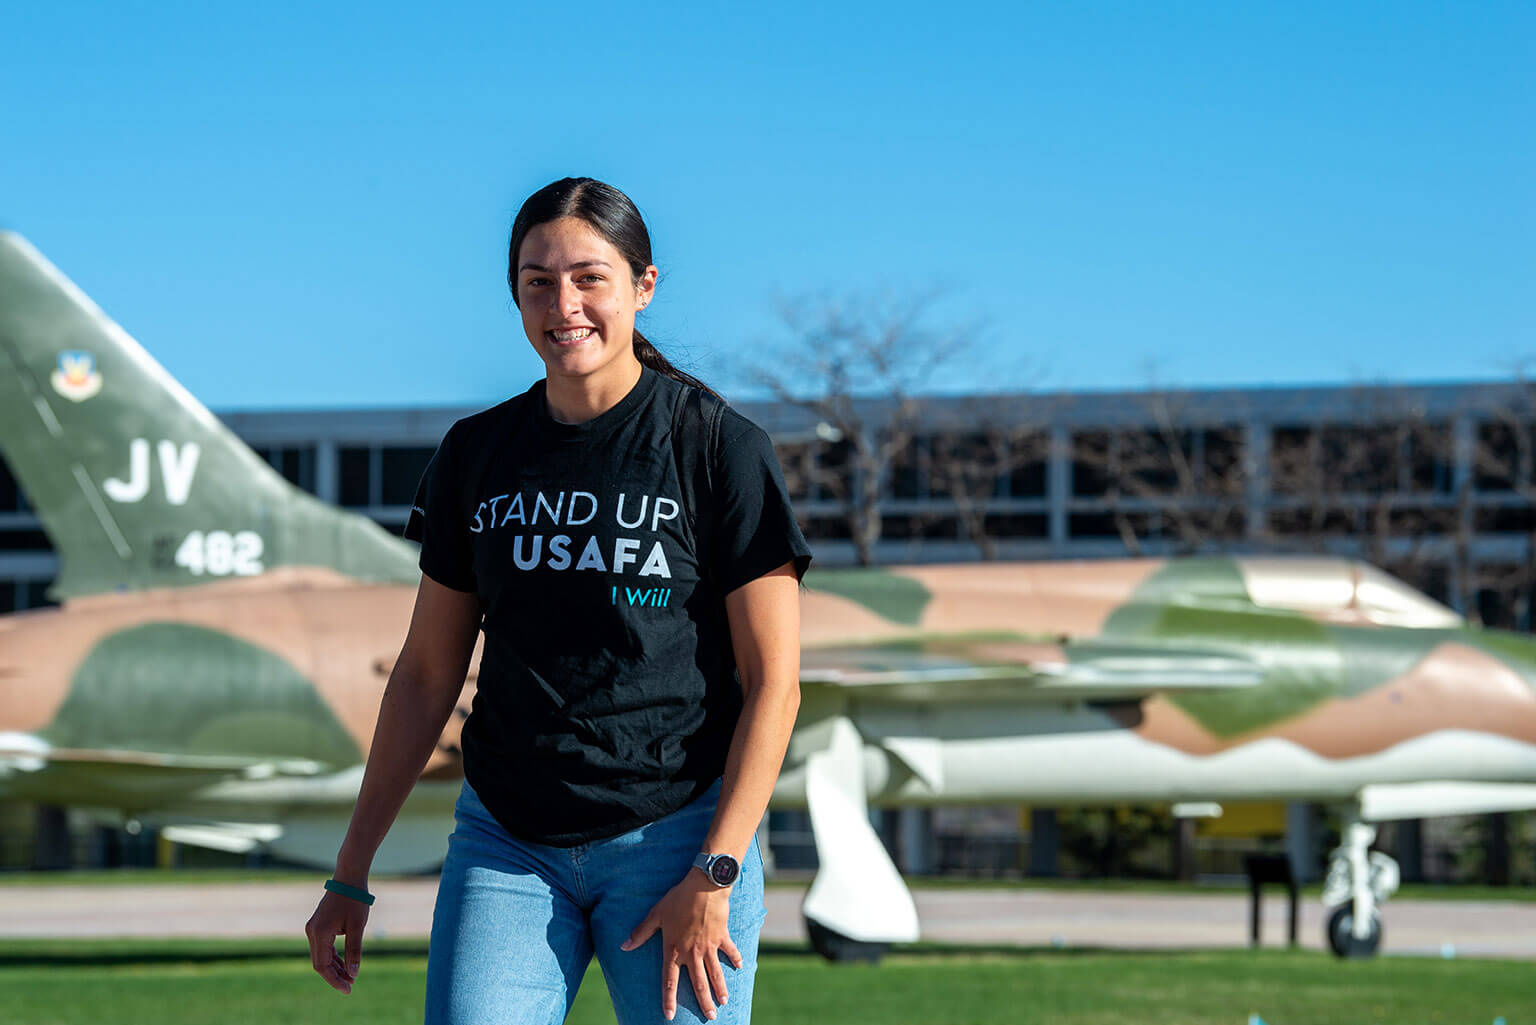 A cadet wearing her “Stand Up USAFA” T-shirt walks across the Terrazzo between classes.